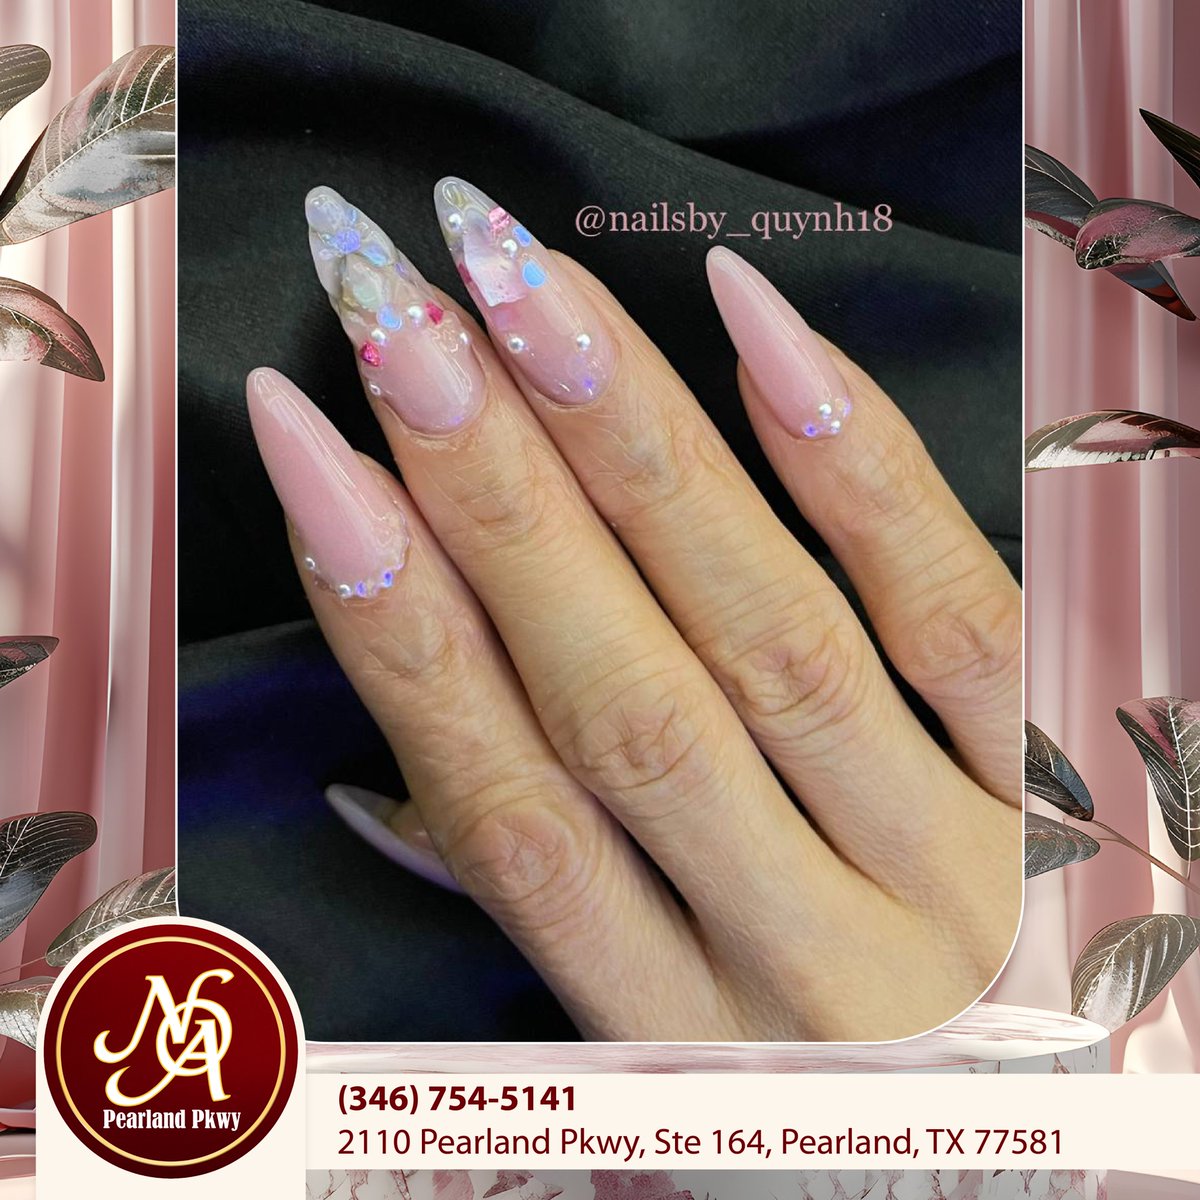 Pink nails that say 'hello spring!' 🦋🌸 These details make your heart sing! 🎶

#nailsofamerica #nailsofamericapearland #nailsalonspearland #manicure #pedicure #spapearland #nailpolish #naillover #nailworld #NailStyle #nailfashion